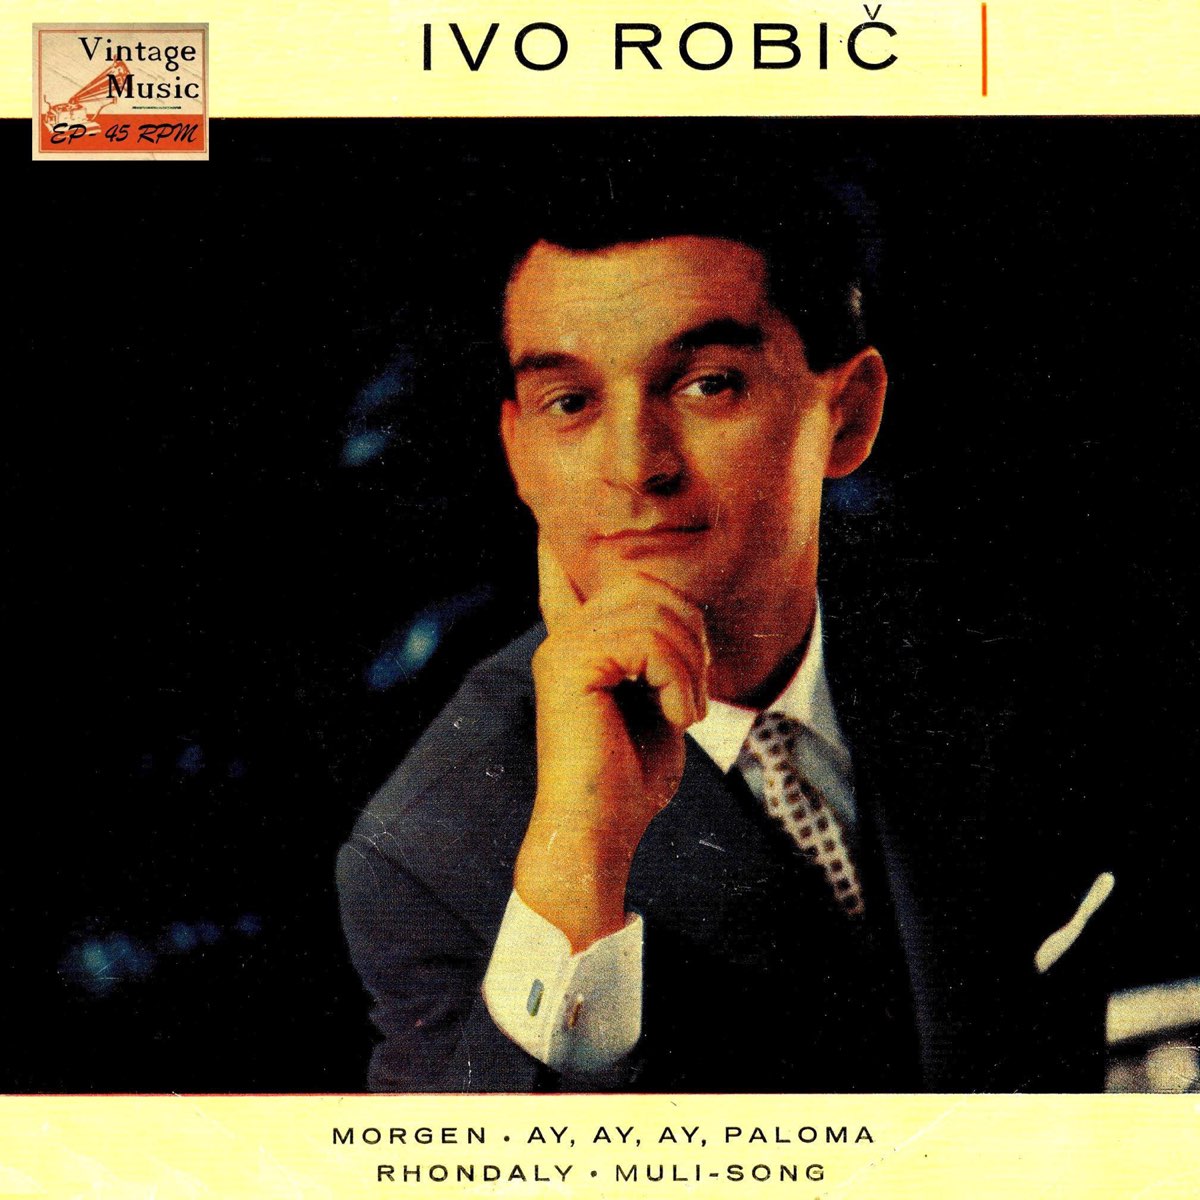 Ivo robic ljubavne pjesme